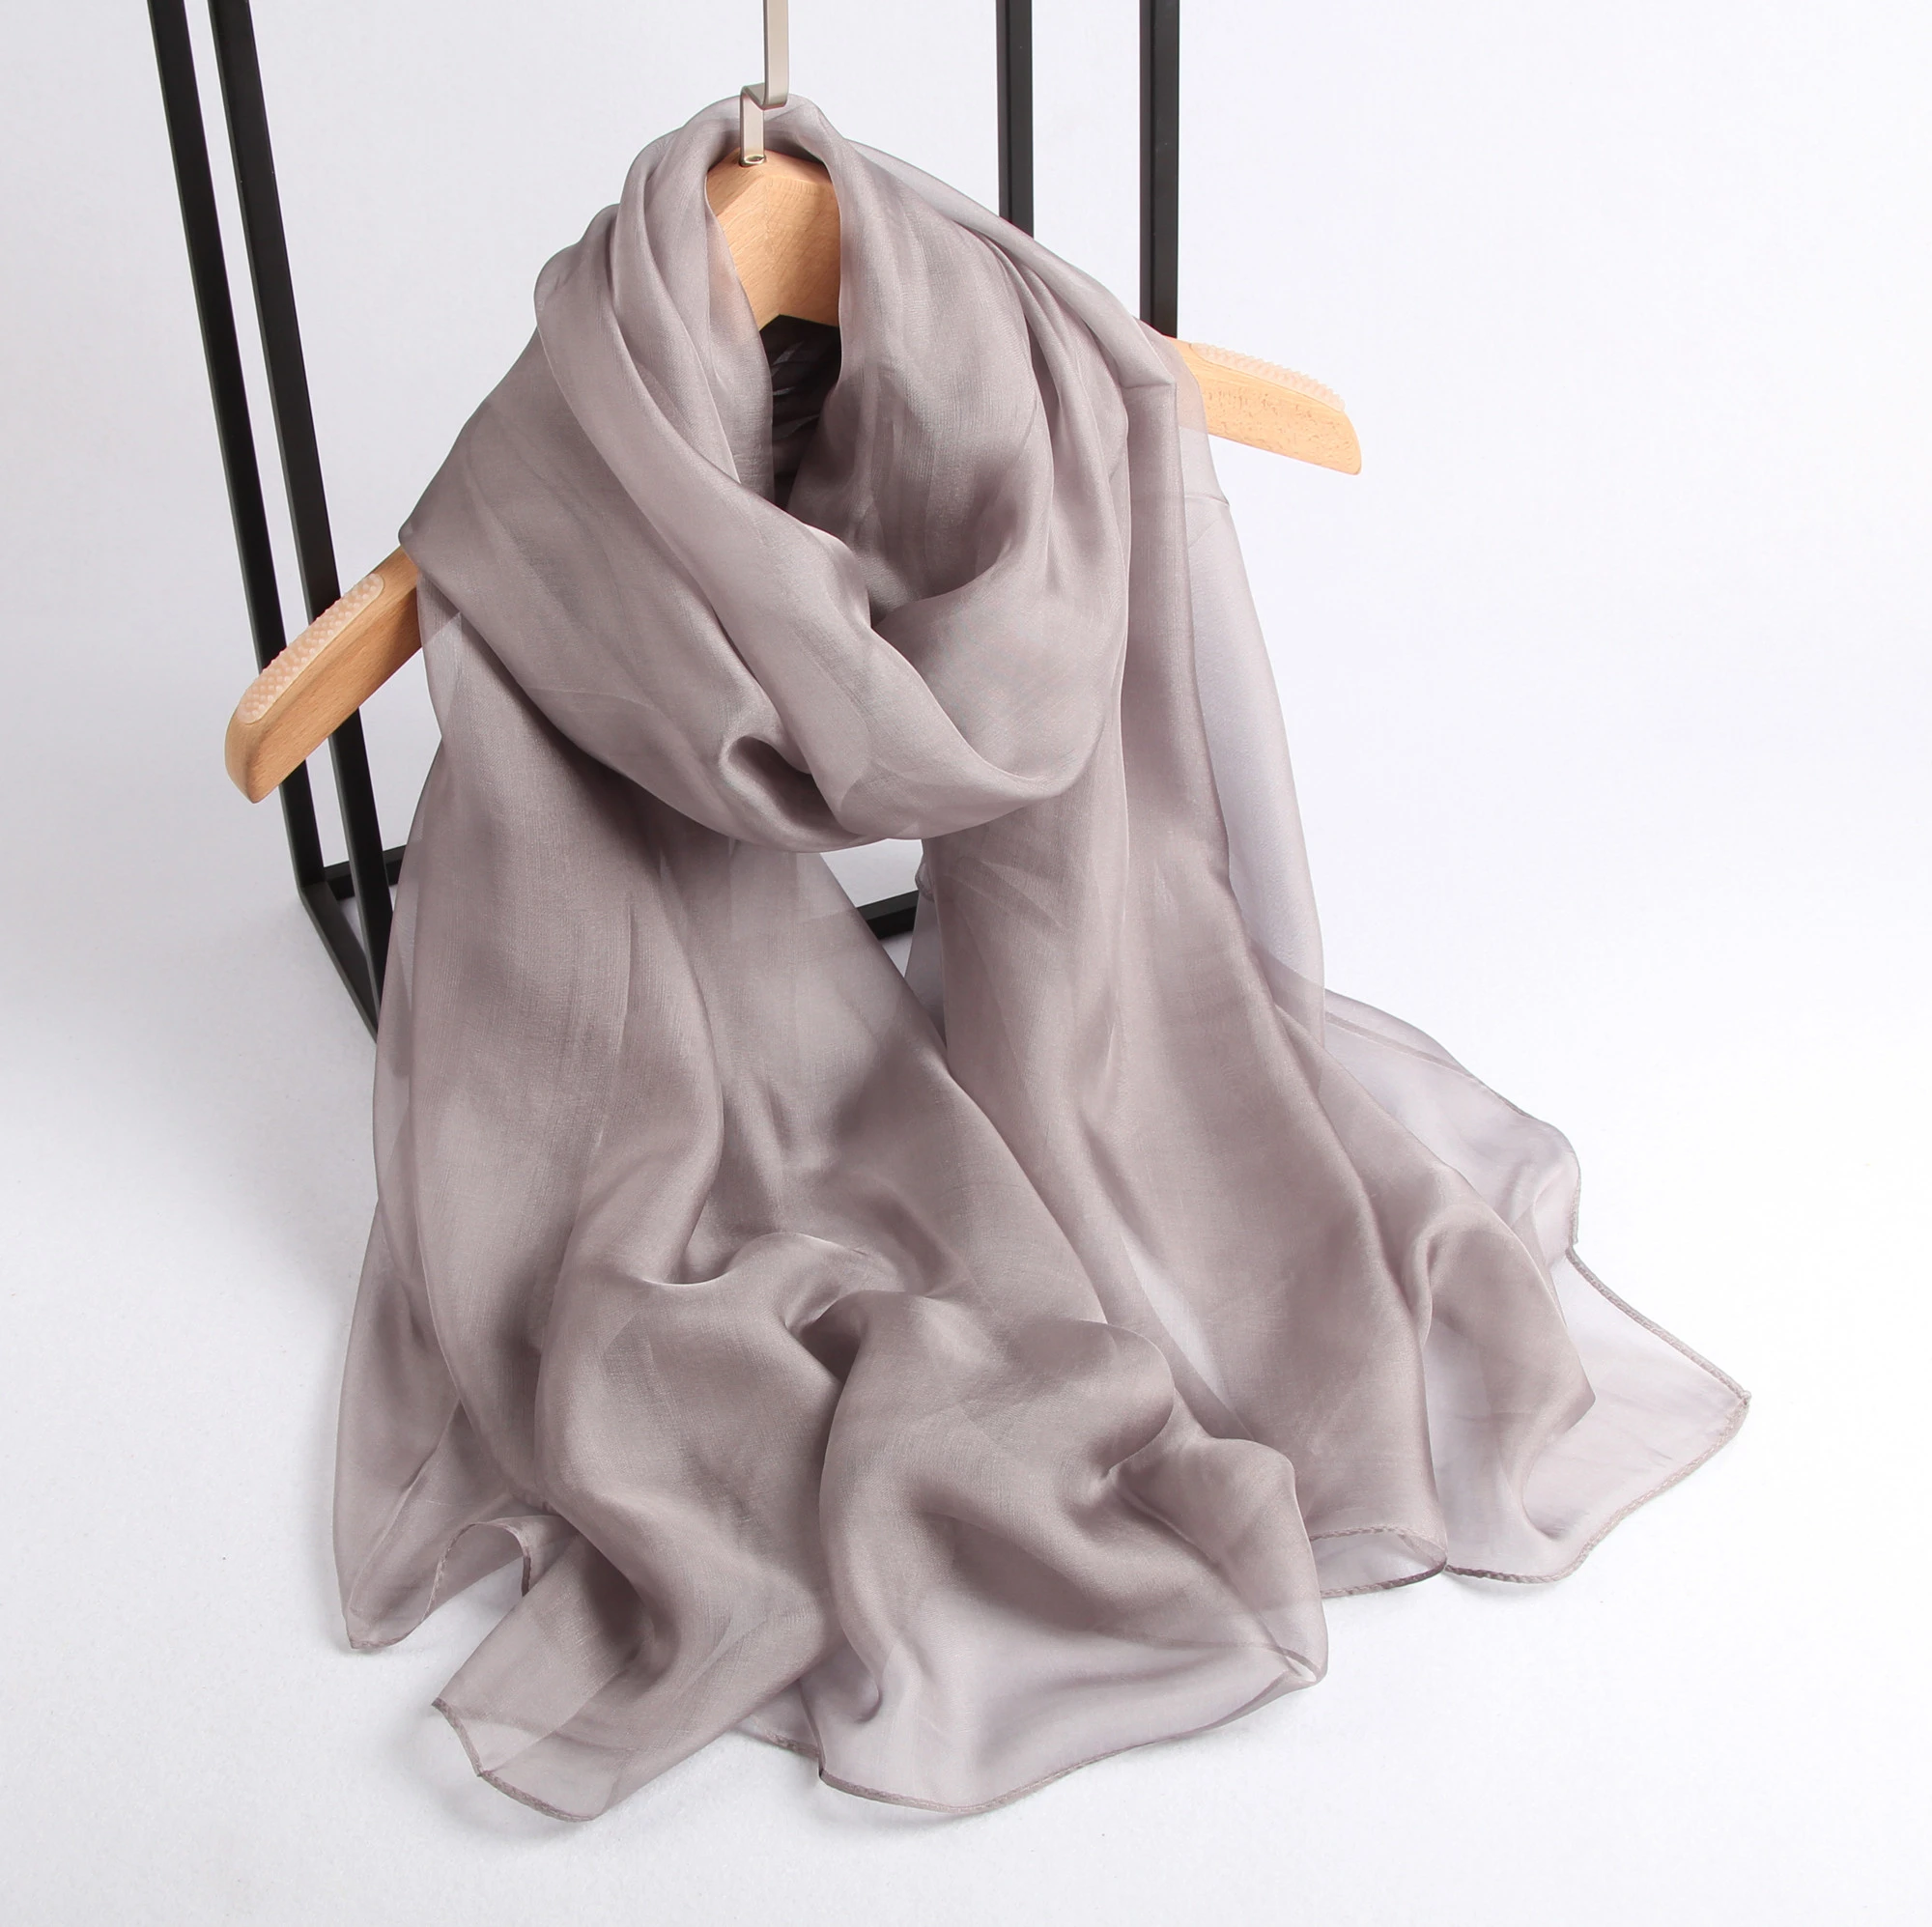 Hot selling large solid color shawl warp silk chiffon scarf